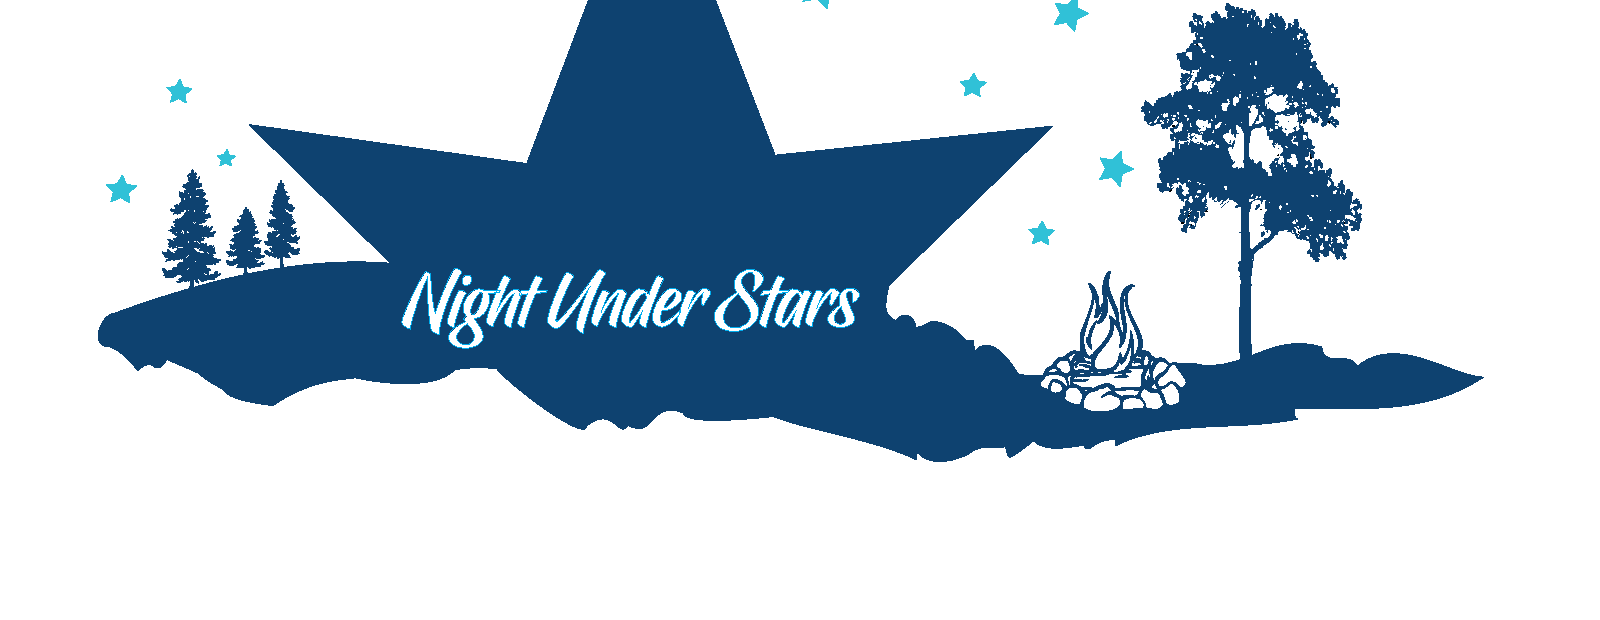 A Night Under Stars - San Antonio